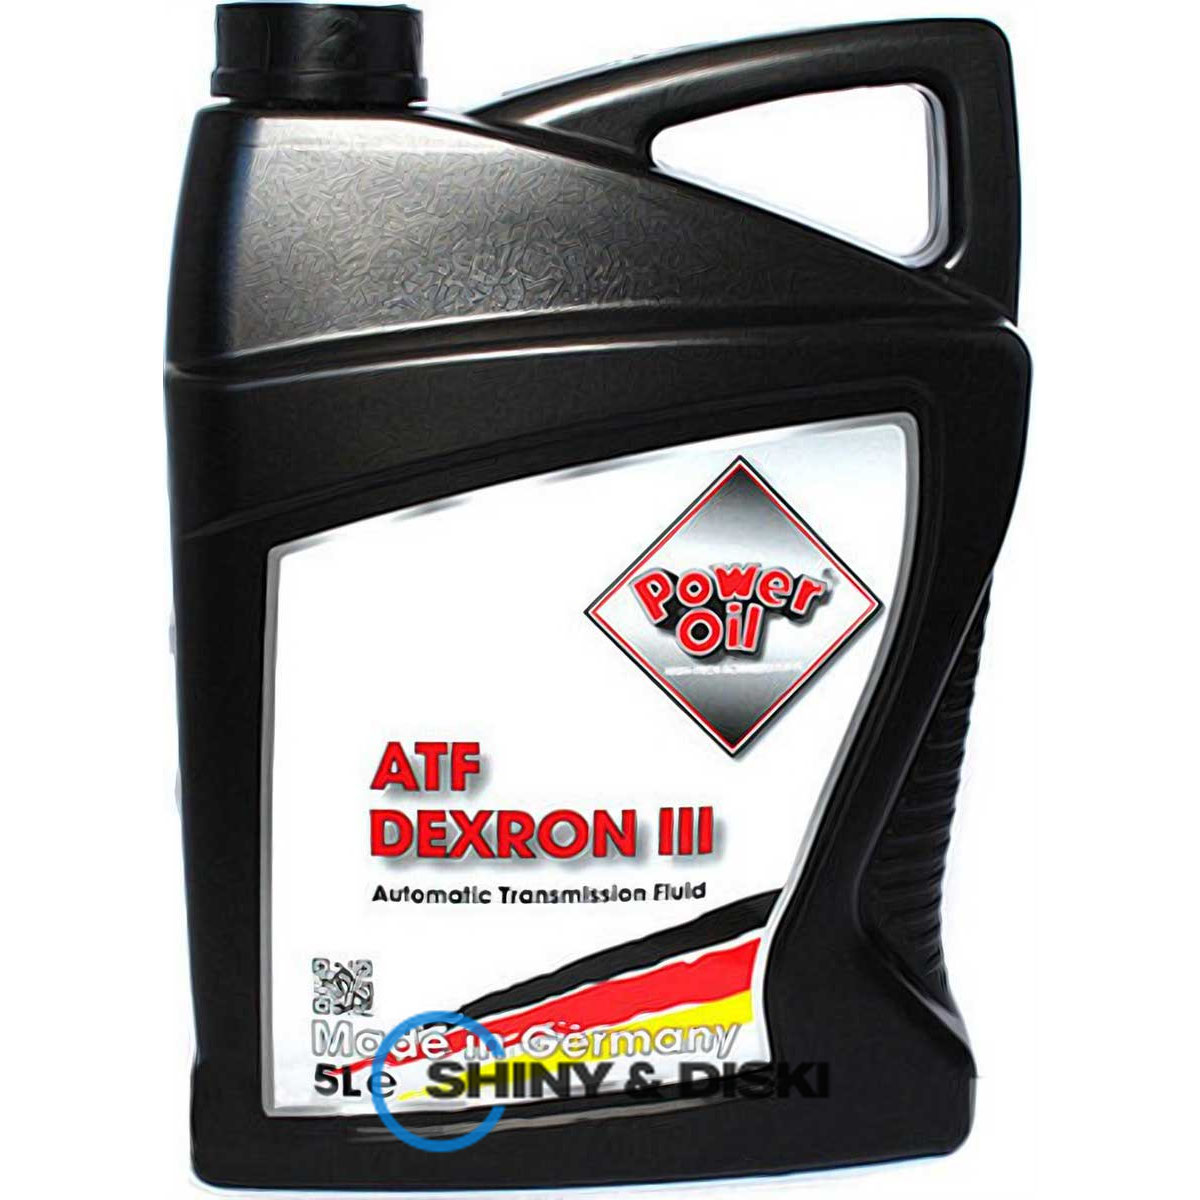 power oil atf dexron iii -red-